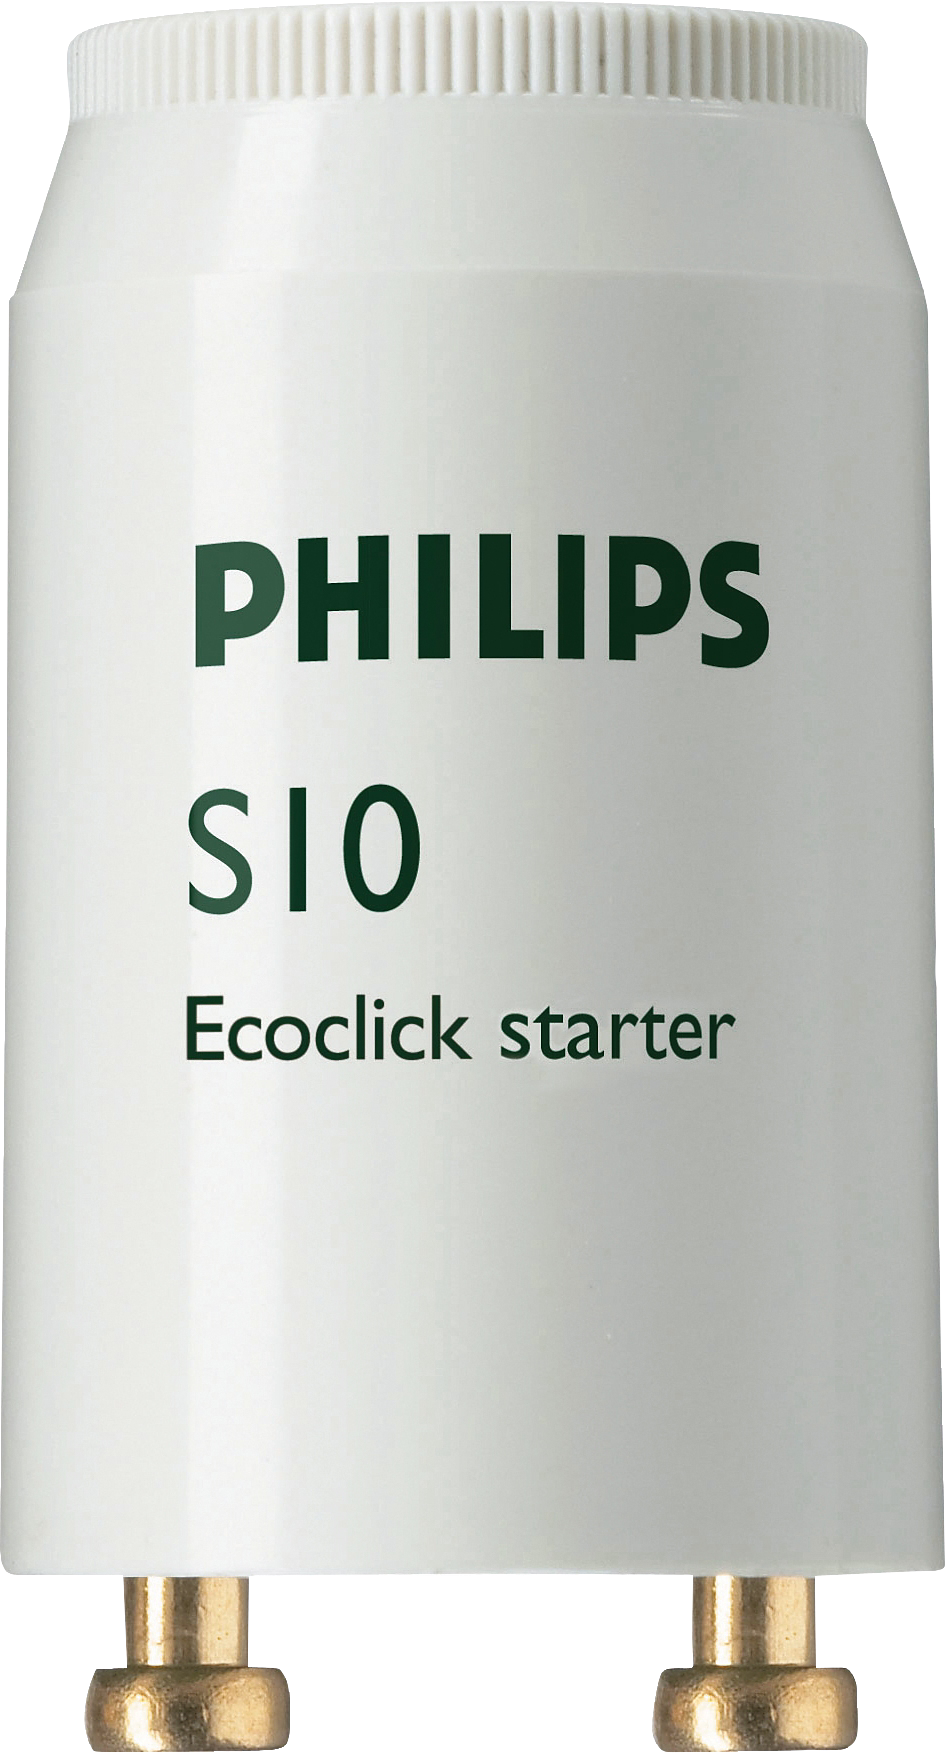 Ecoclick Starters